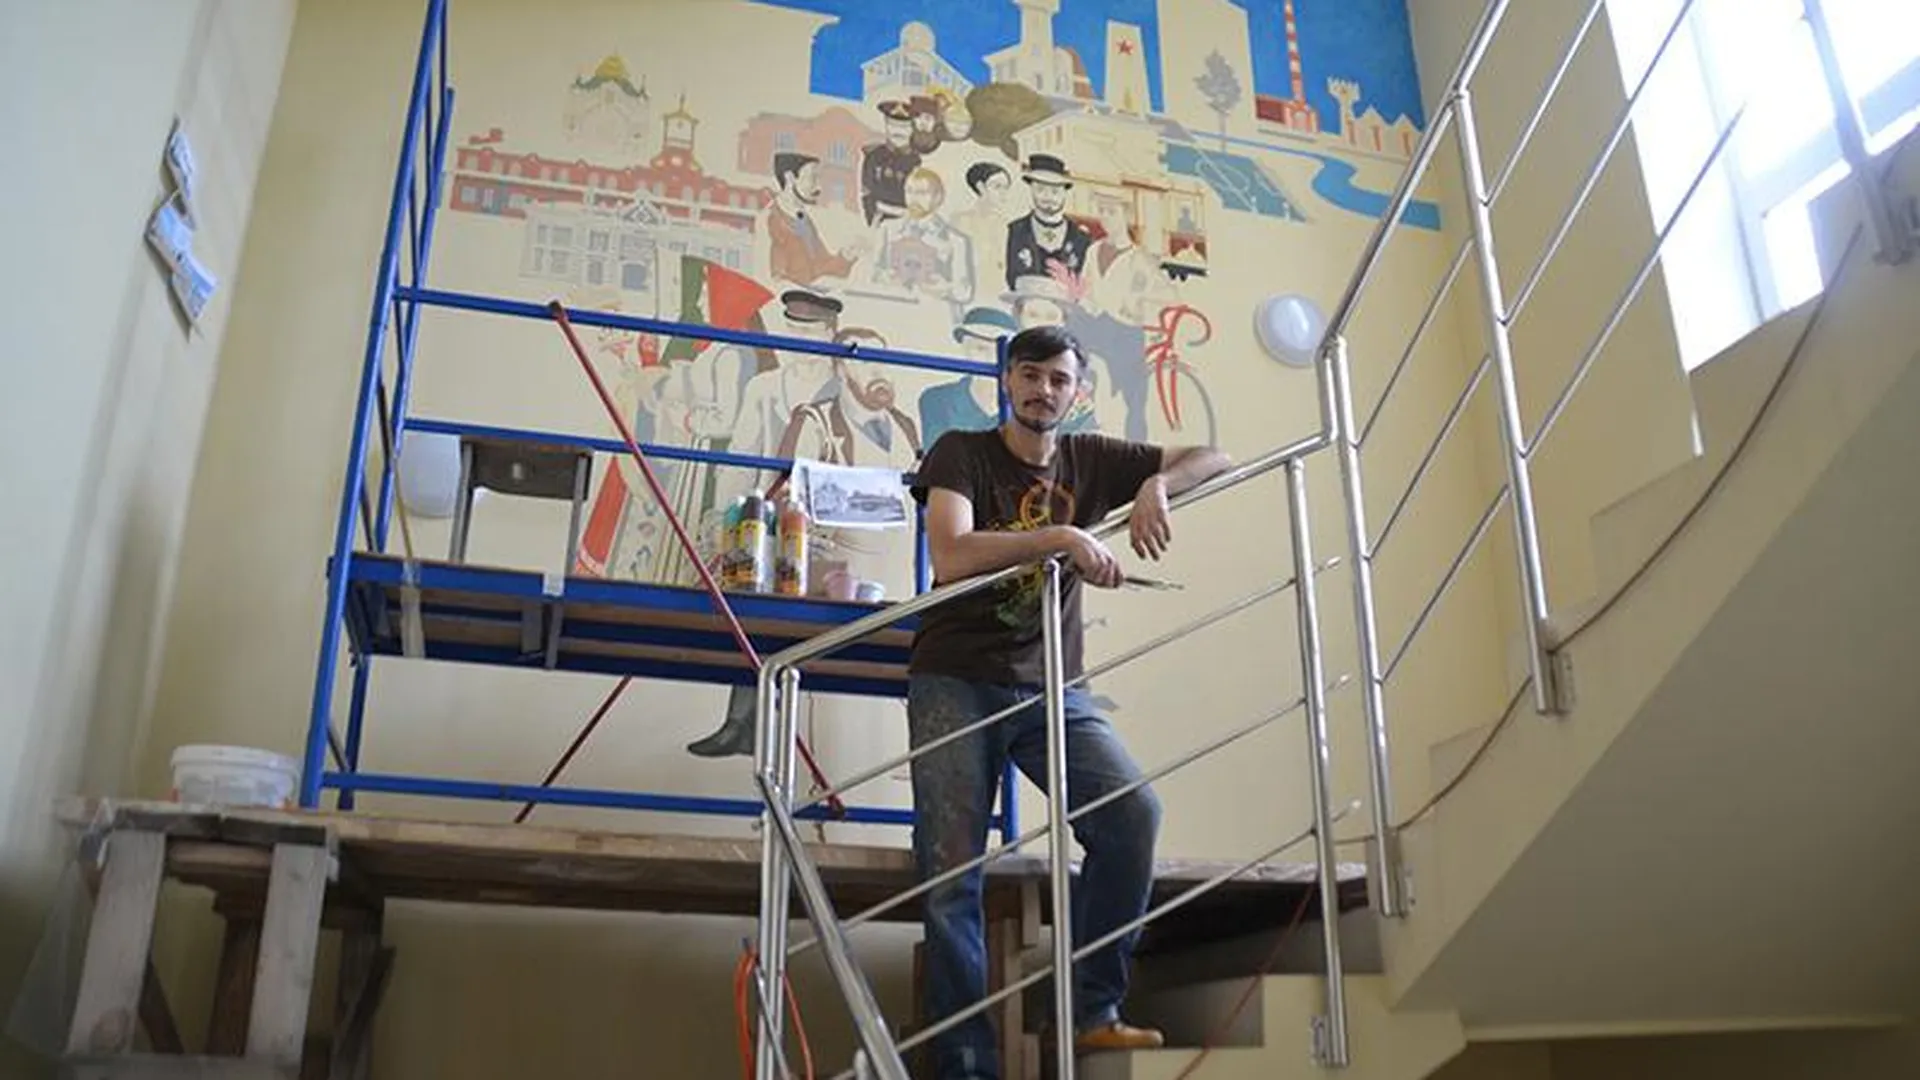 На арене девочка с персиками: стены ФОКа в Ногинске украсят масштабным панно с портретами